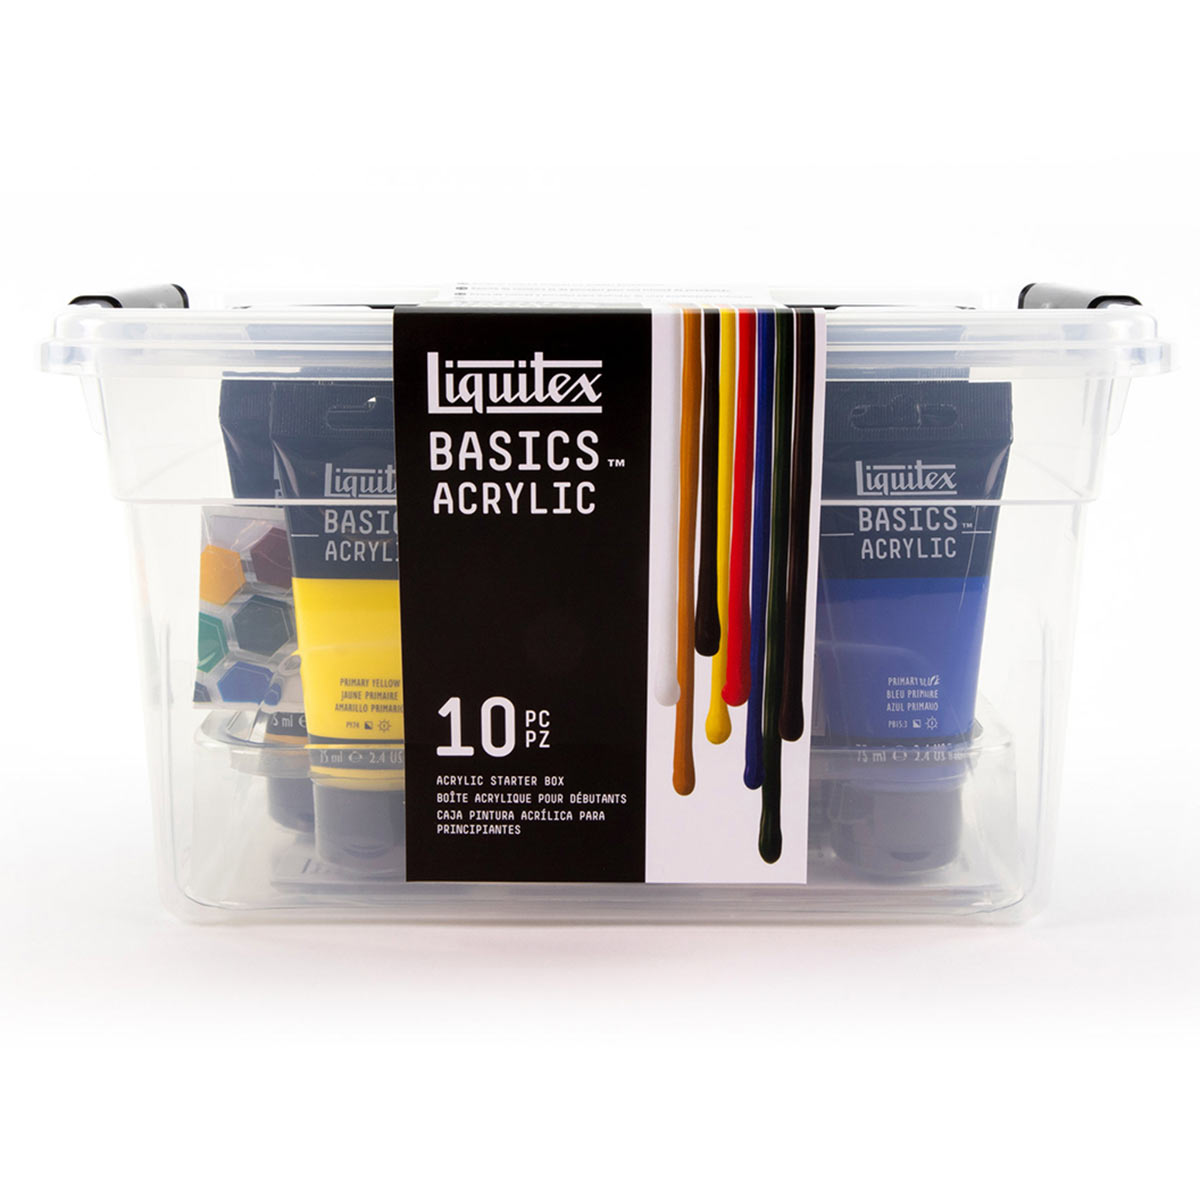 Liquitex - Basics Acrylic Paint Set Starter Box - 10 piece